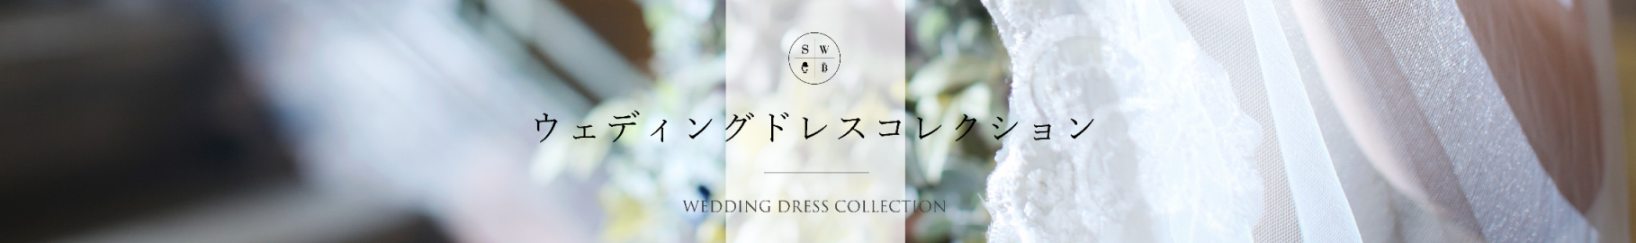 wedding dress collection ttl